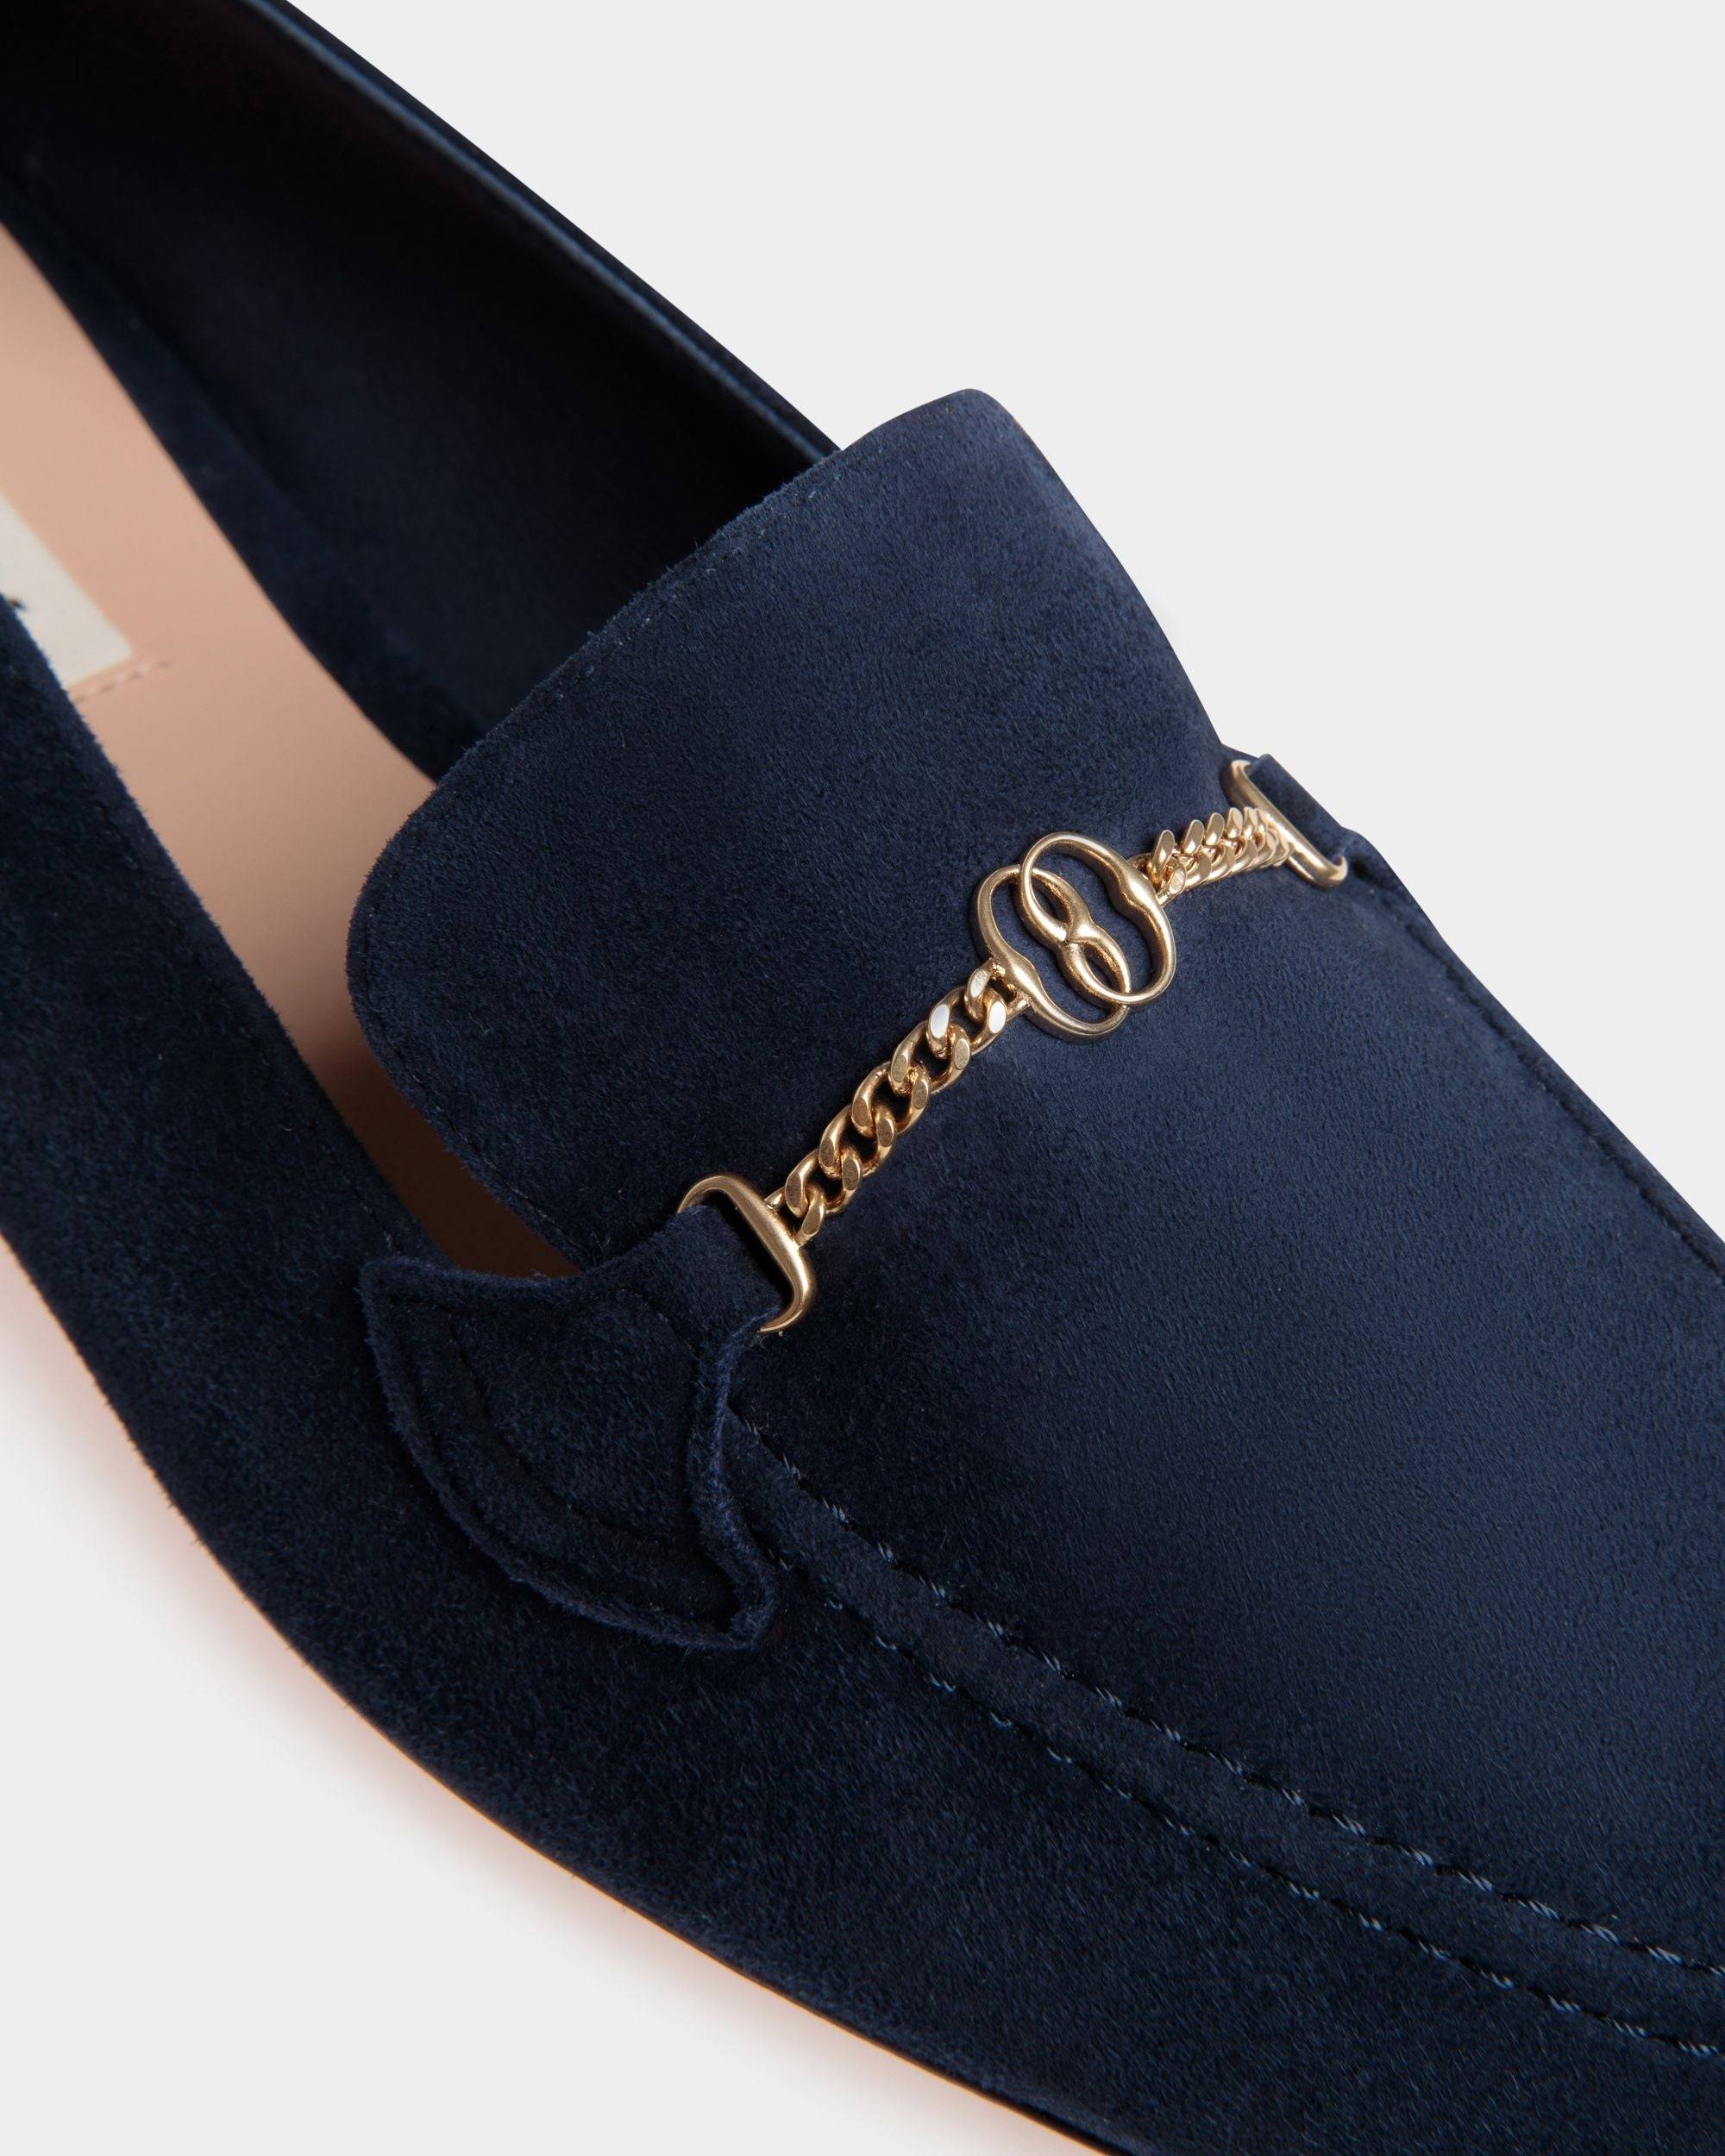 Daily-Emblem | Damen-Loafer aus blauem Veloursleder | Bally | Still Life Detail